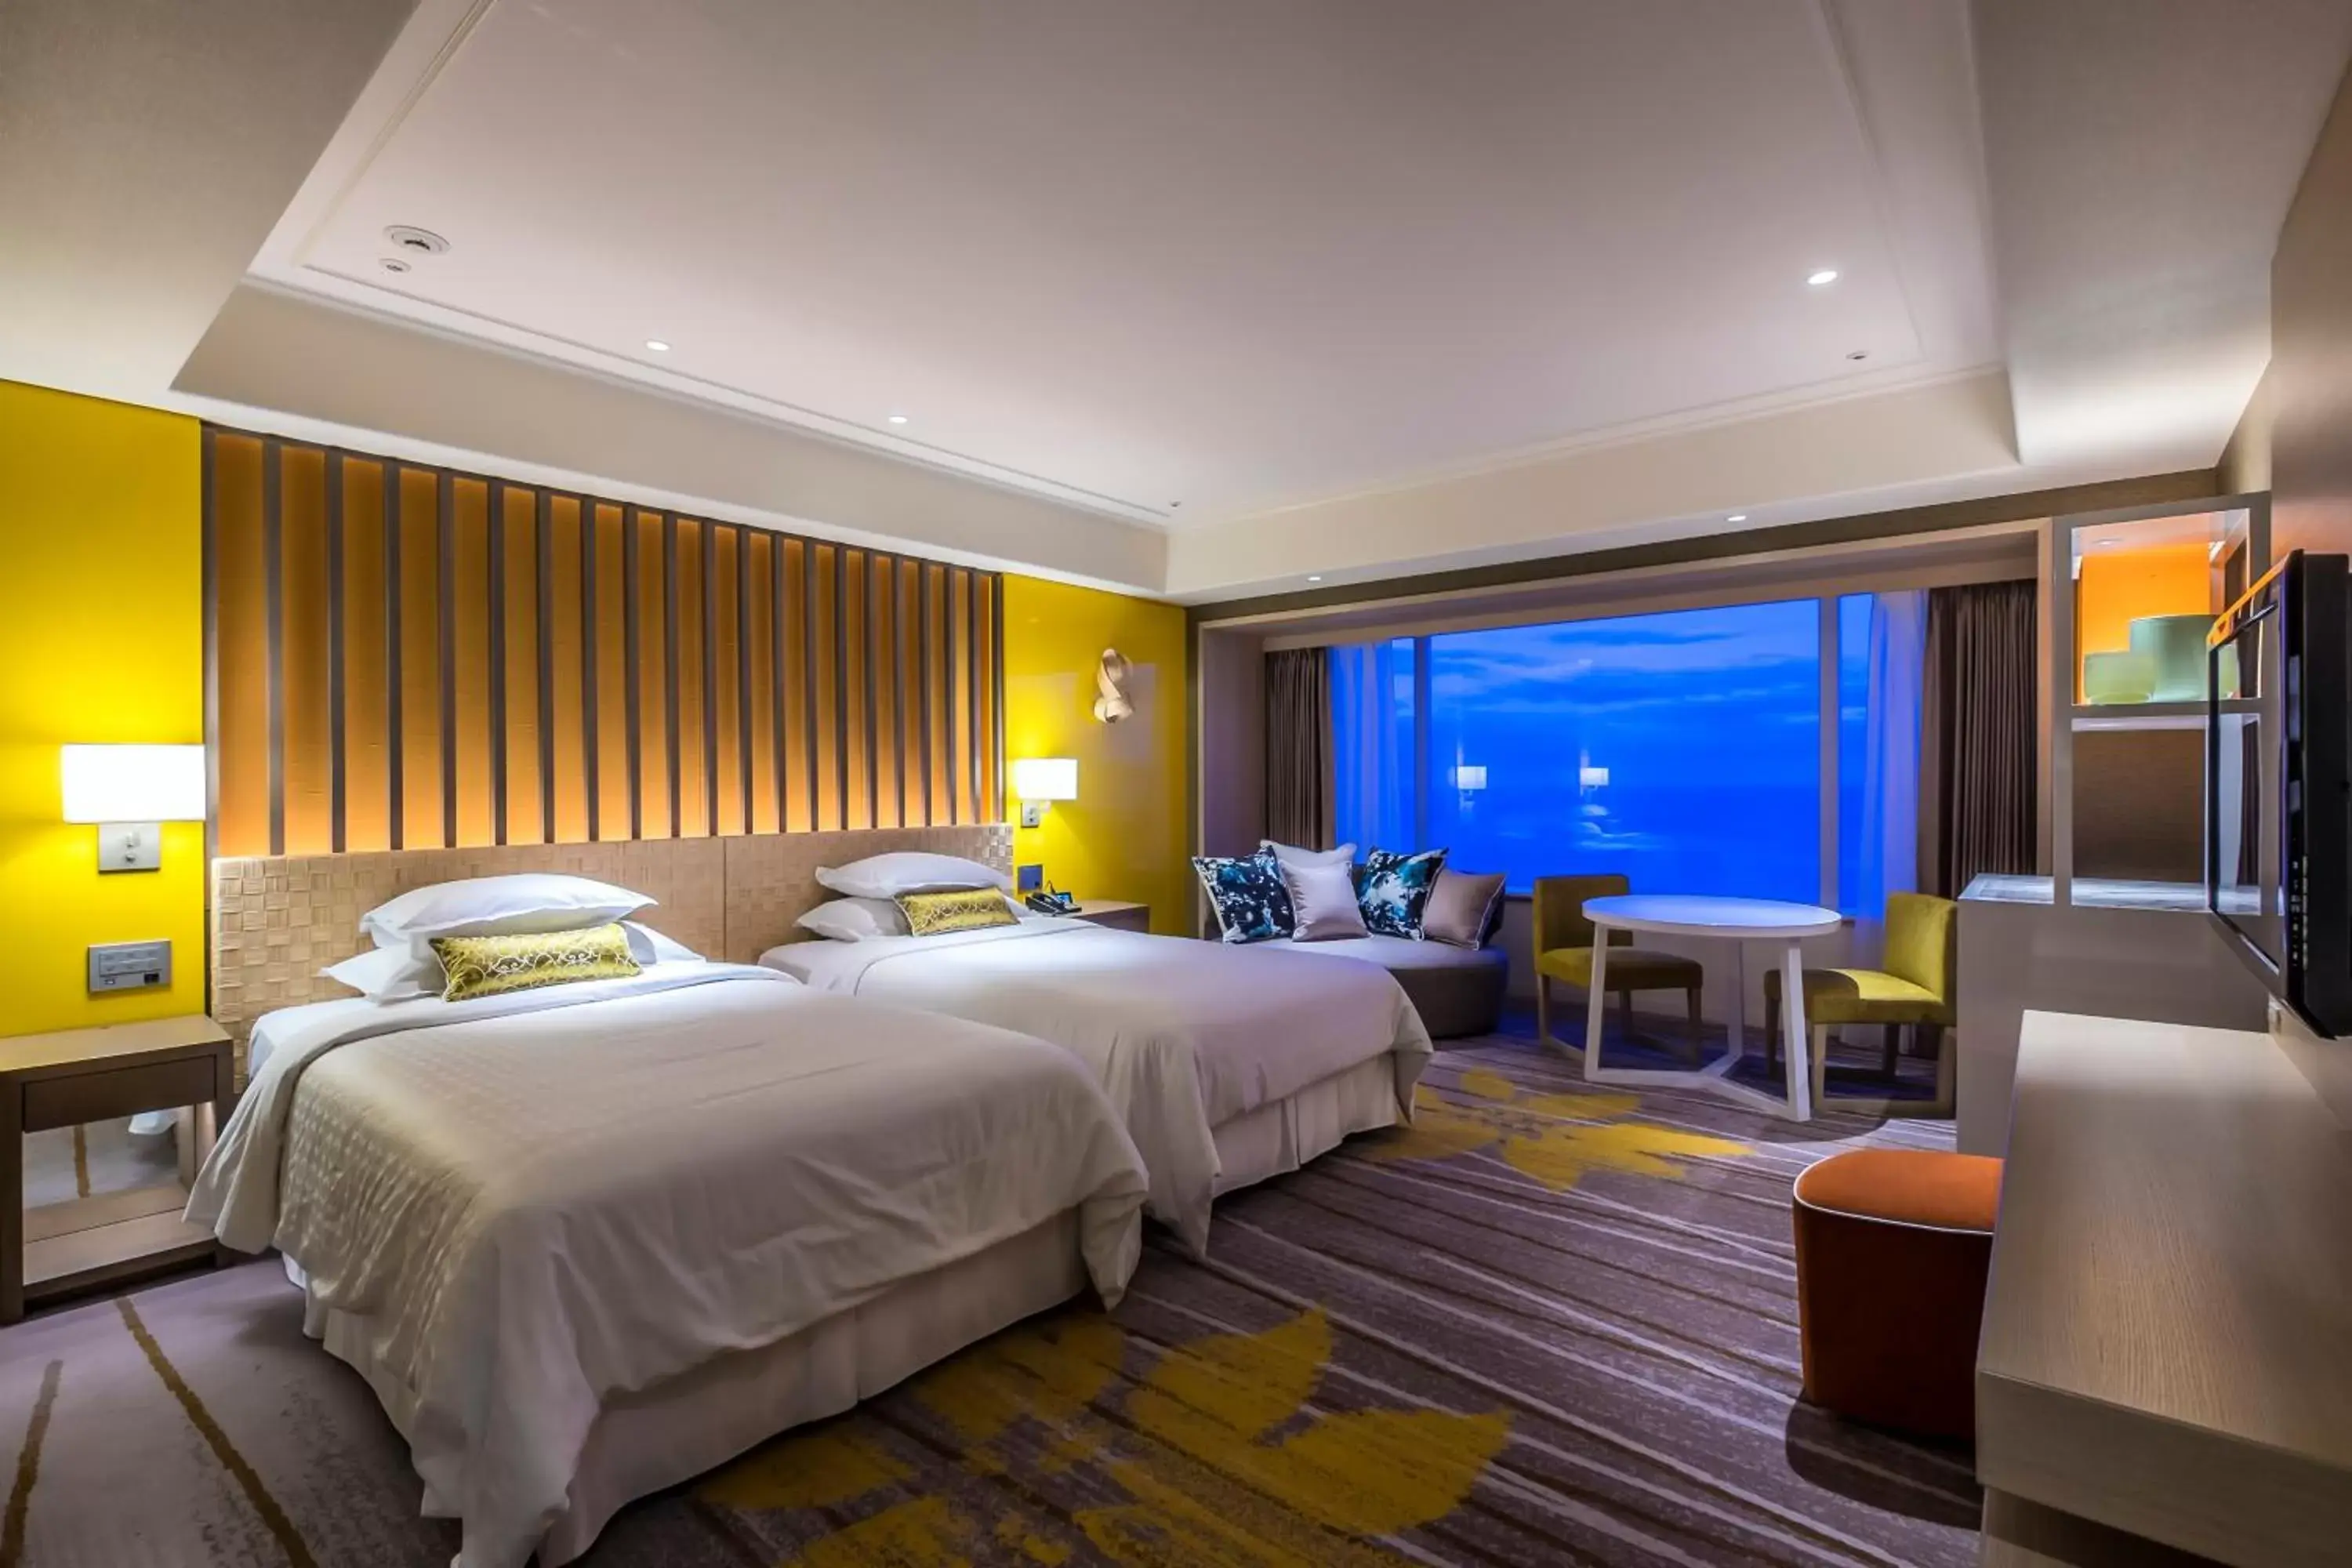 Club Twin Grand Room with Ocean View - single occupancy - Non-Smoking in Sheraton Grande Ocean Resort